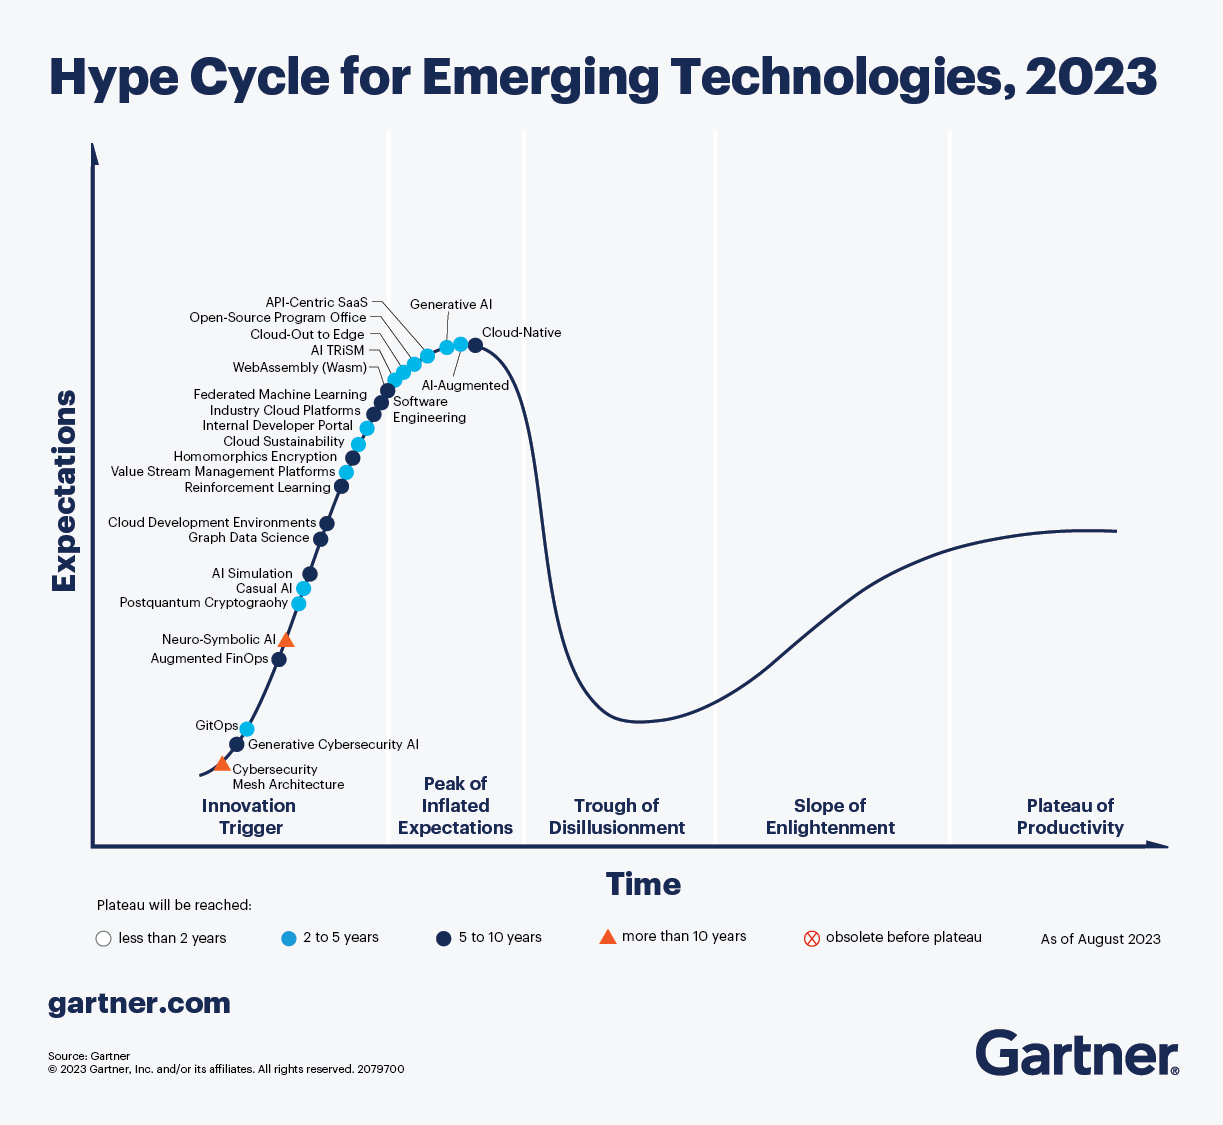 Gartner’s Hype Cycle for Emerging Technologies, 2023